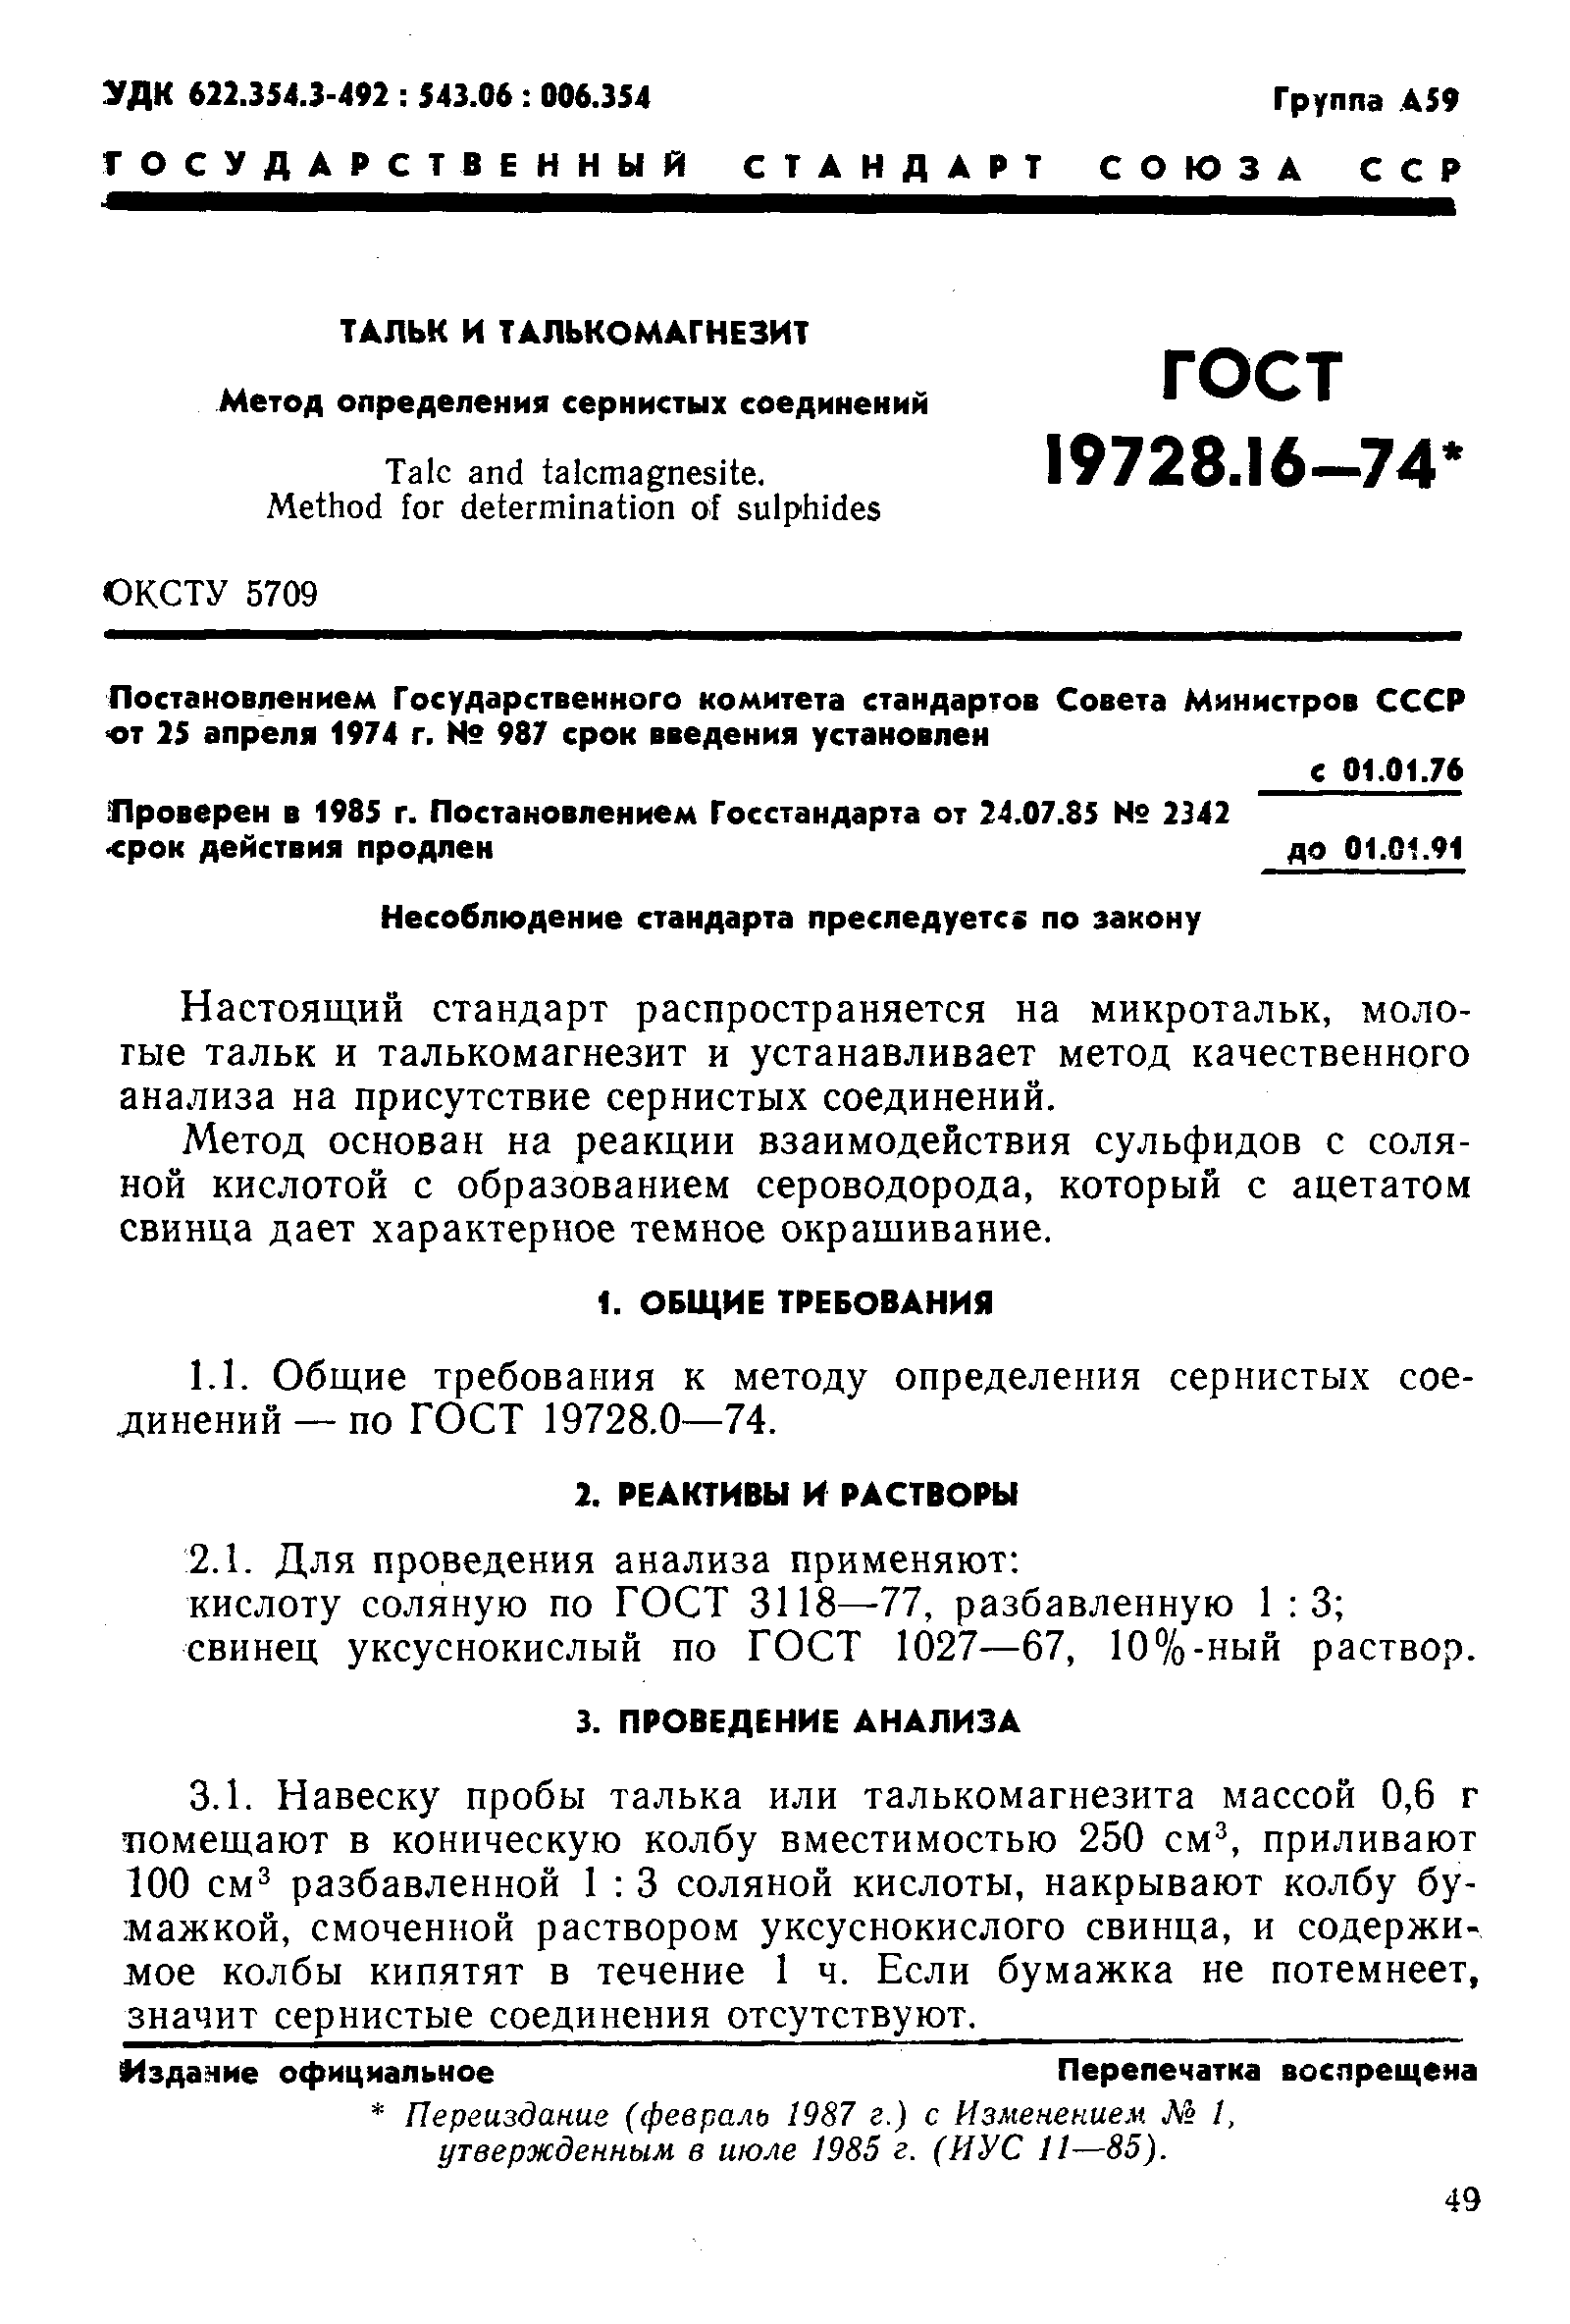 ГОСТ 19728.16-74